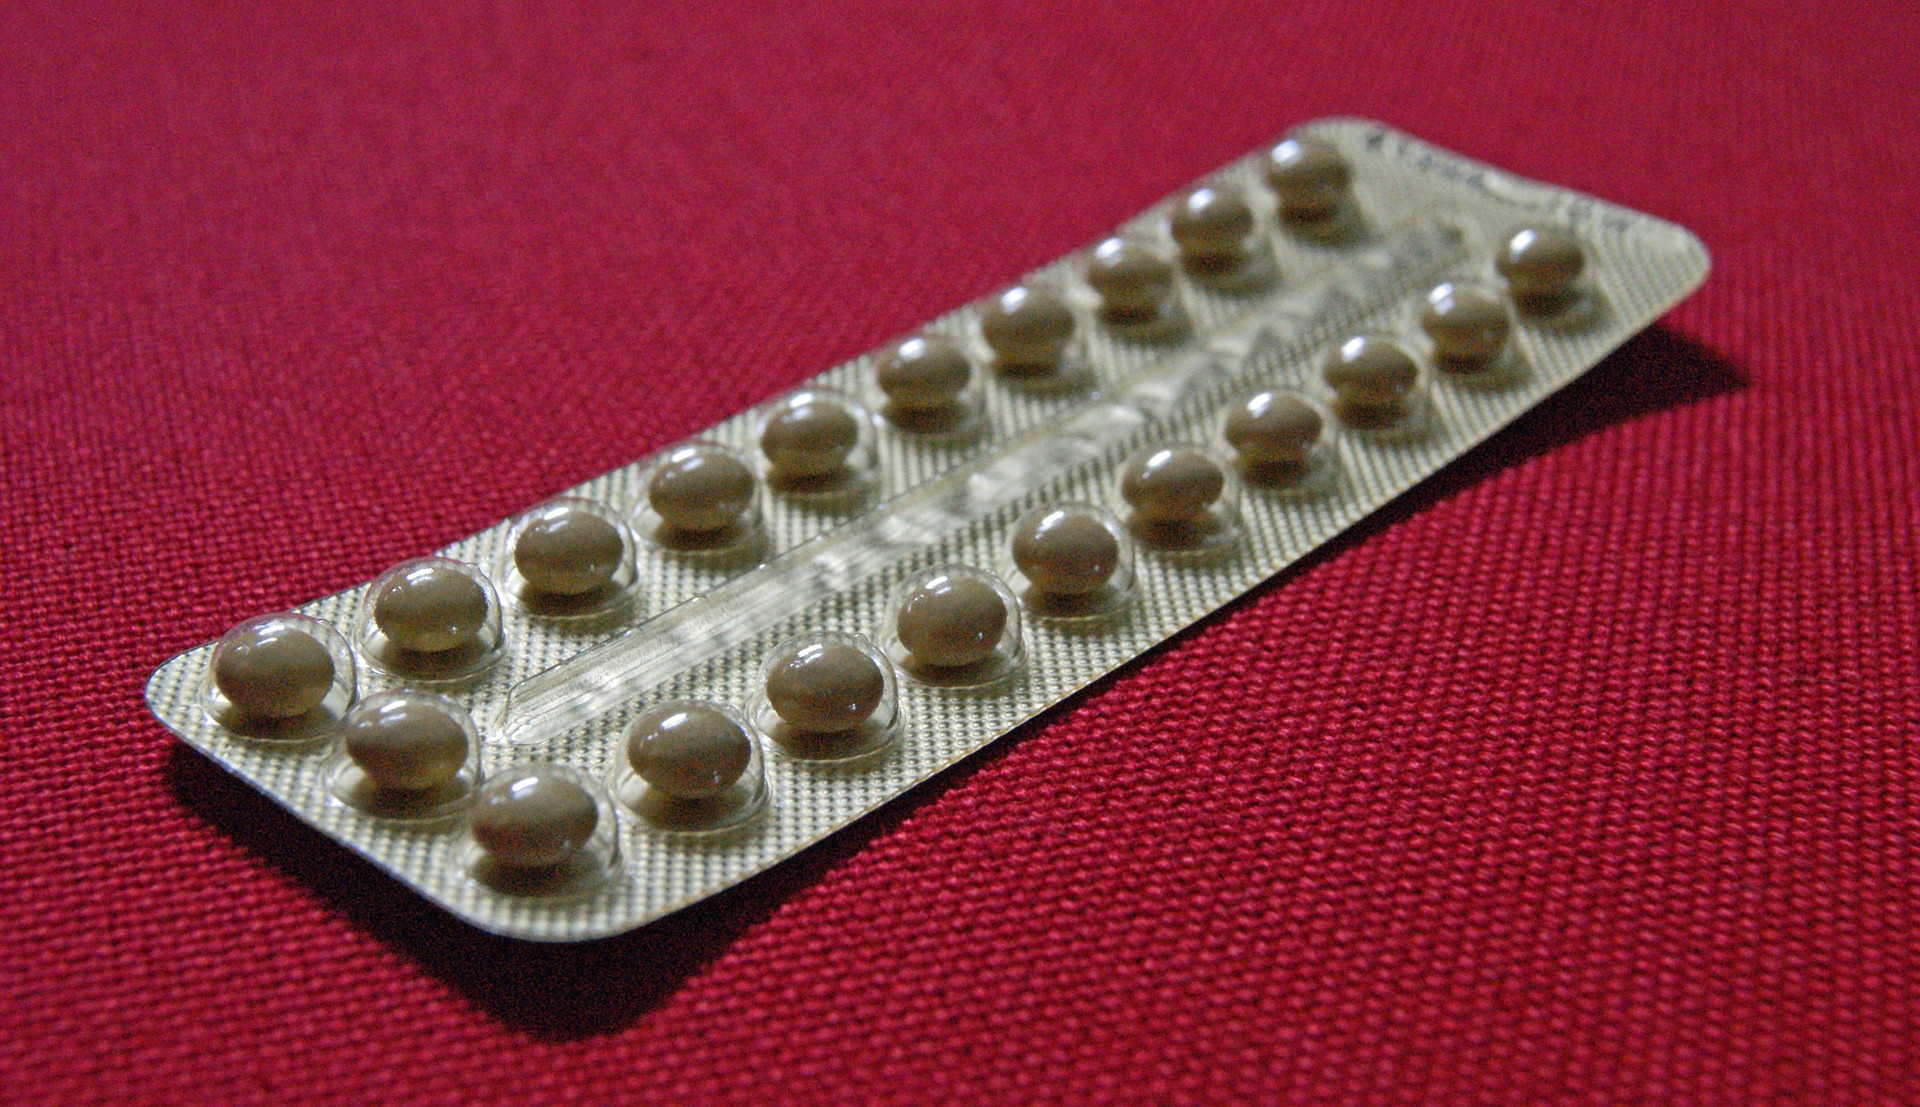 Contraceptive pills (stock image).